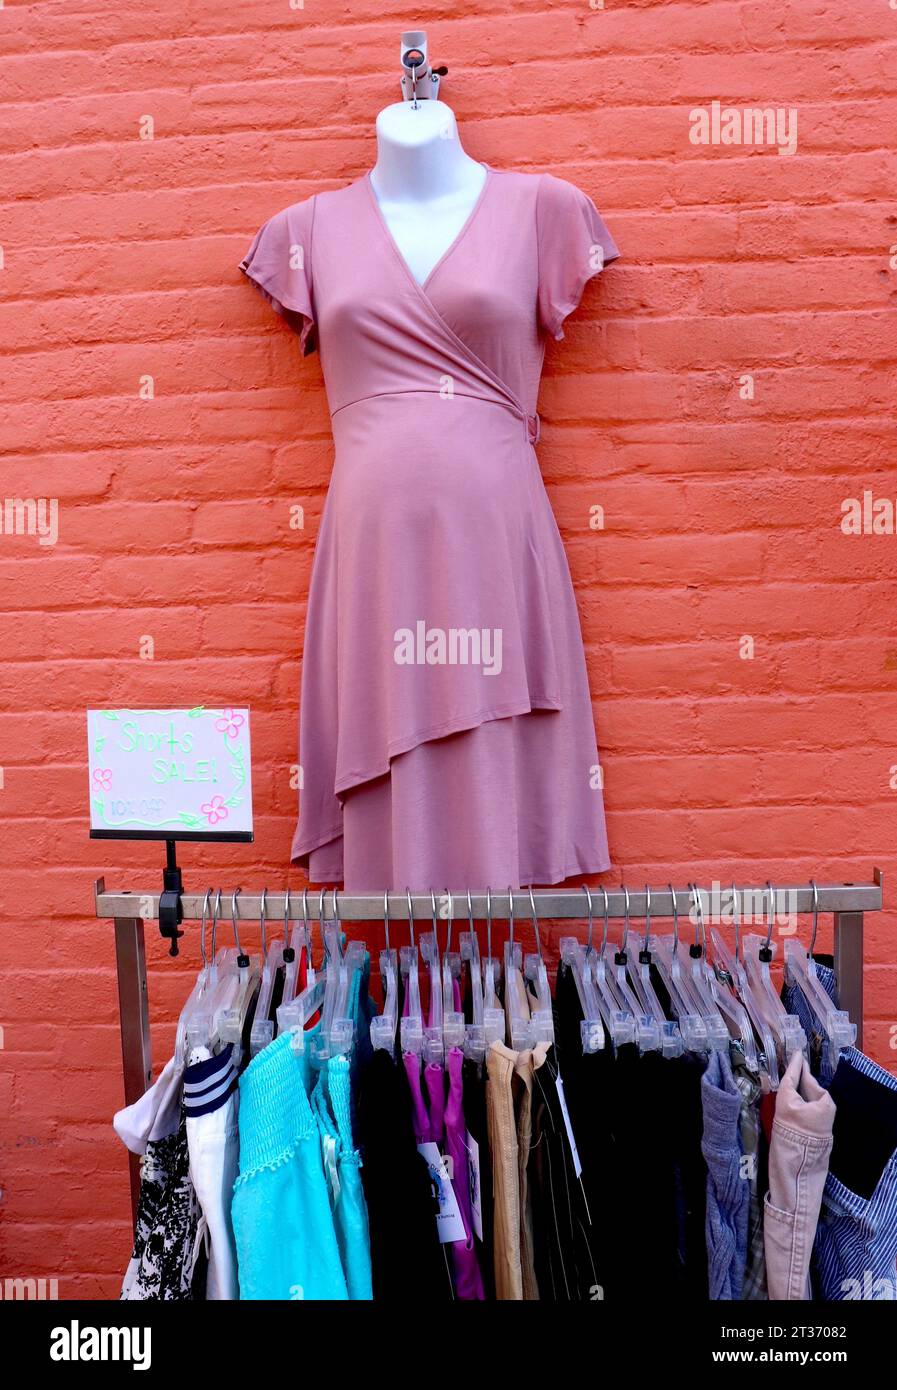 https://c8.alamy.com/comp/2T37082/womens-clothing-outdoor-sale-2T37082.jpg